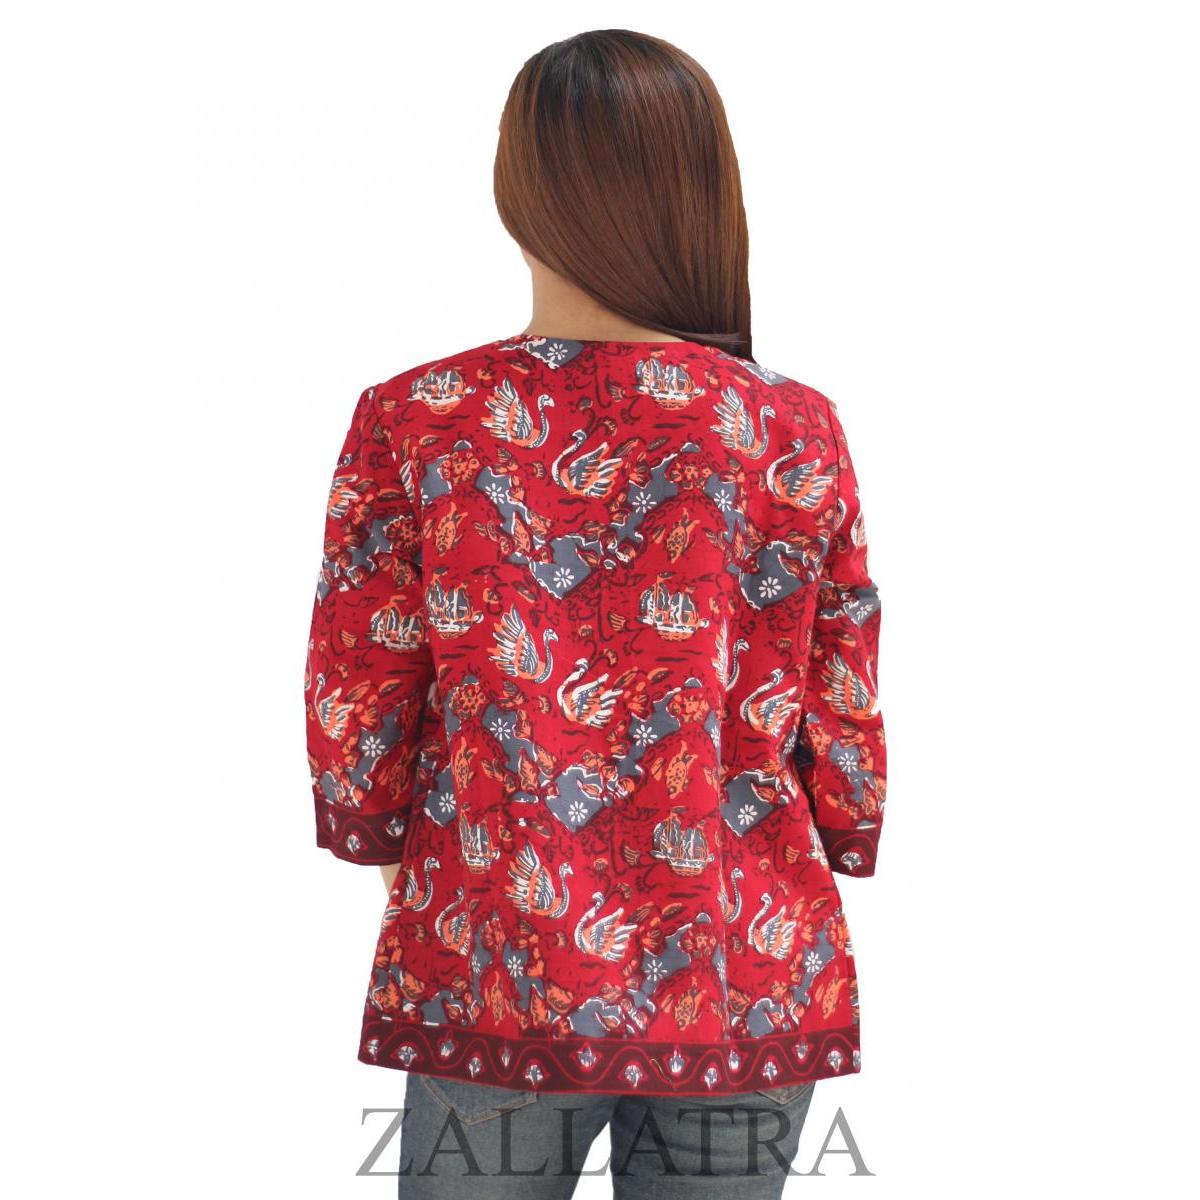  Model  Baju Batik  Wanita Motif  Angso Duo Merah X5